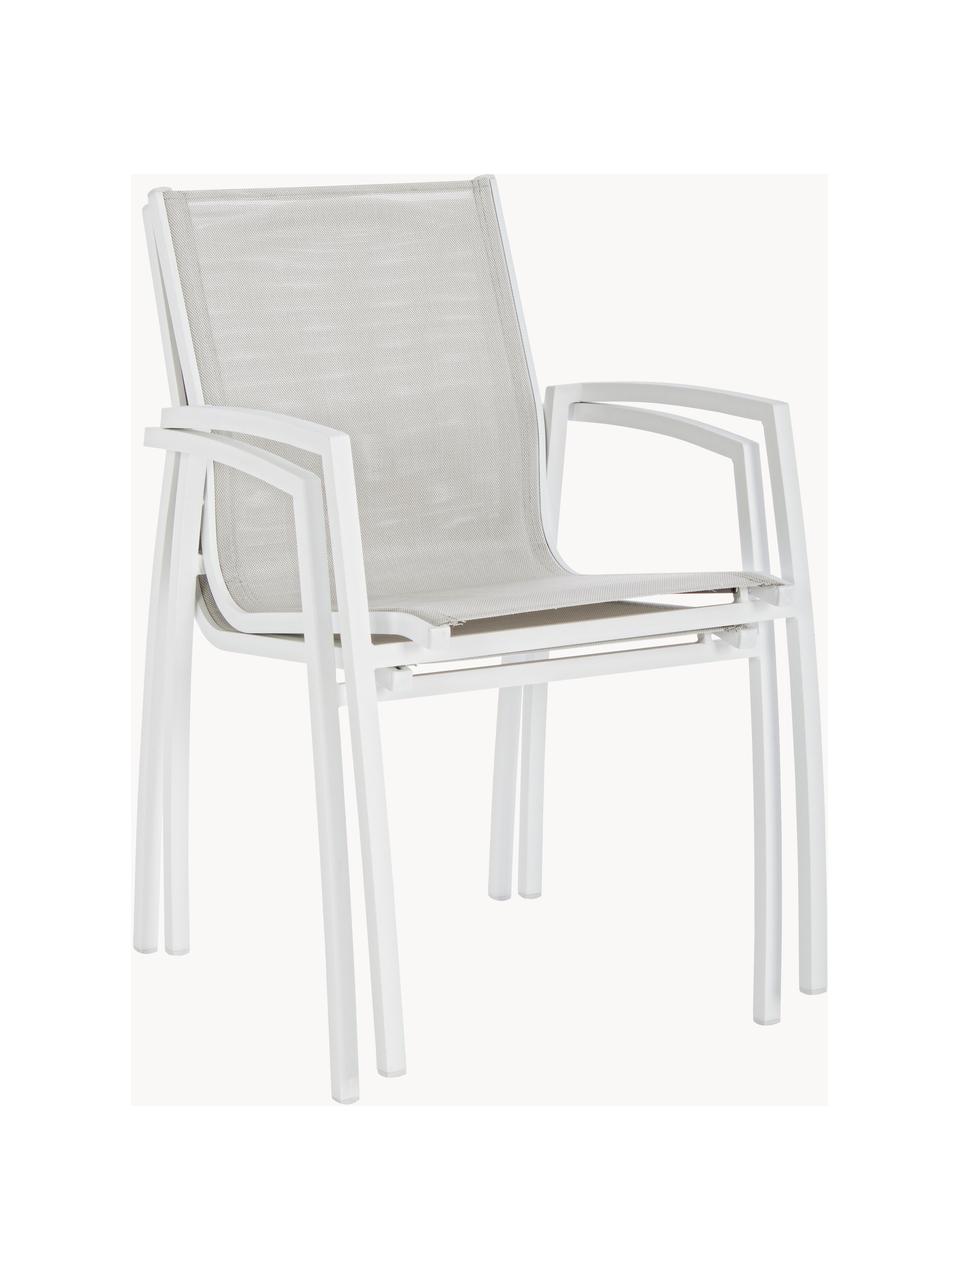 Zahradní židle Hilla, Greige, bílá, Š 57 cm, H 61 cm